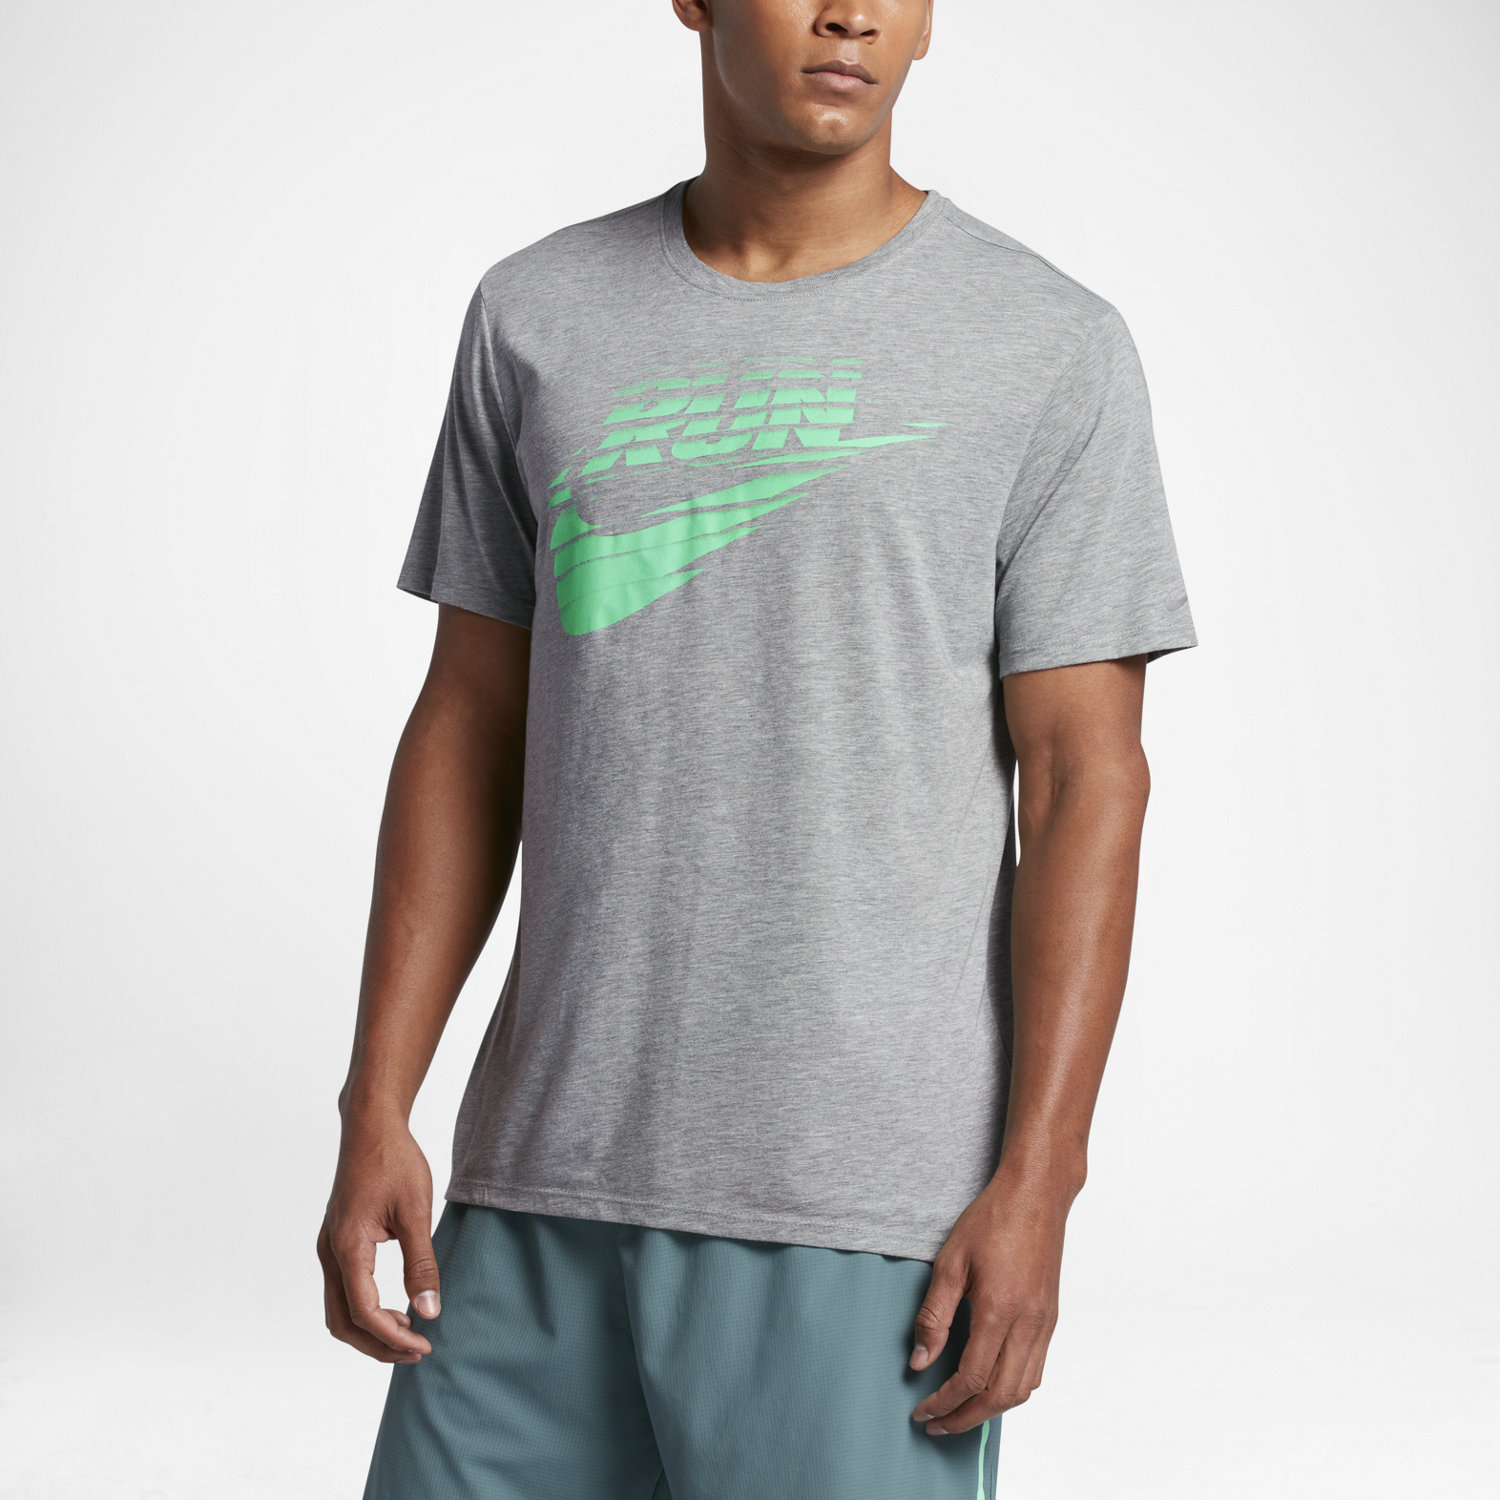 Nike Speed - Men's Running T-Shirt